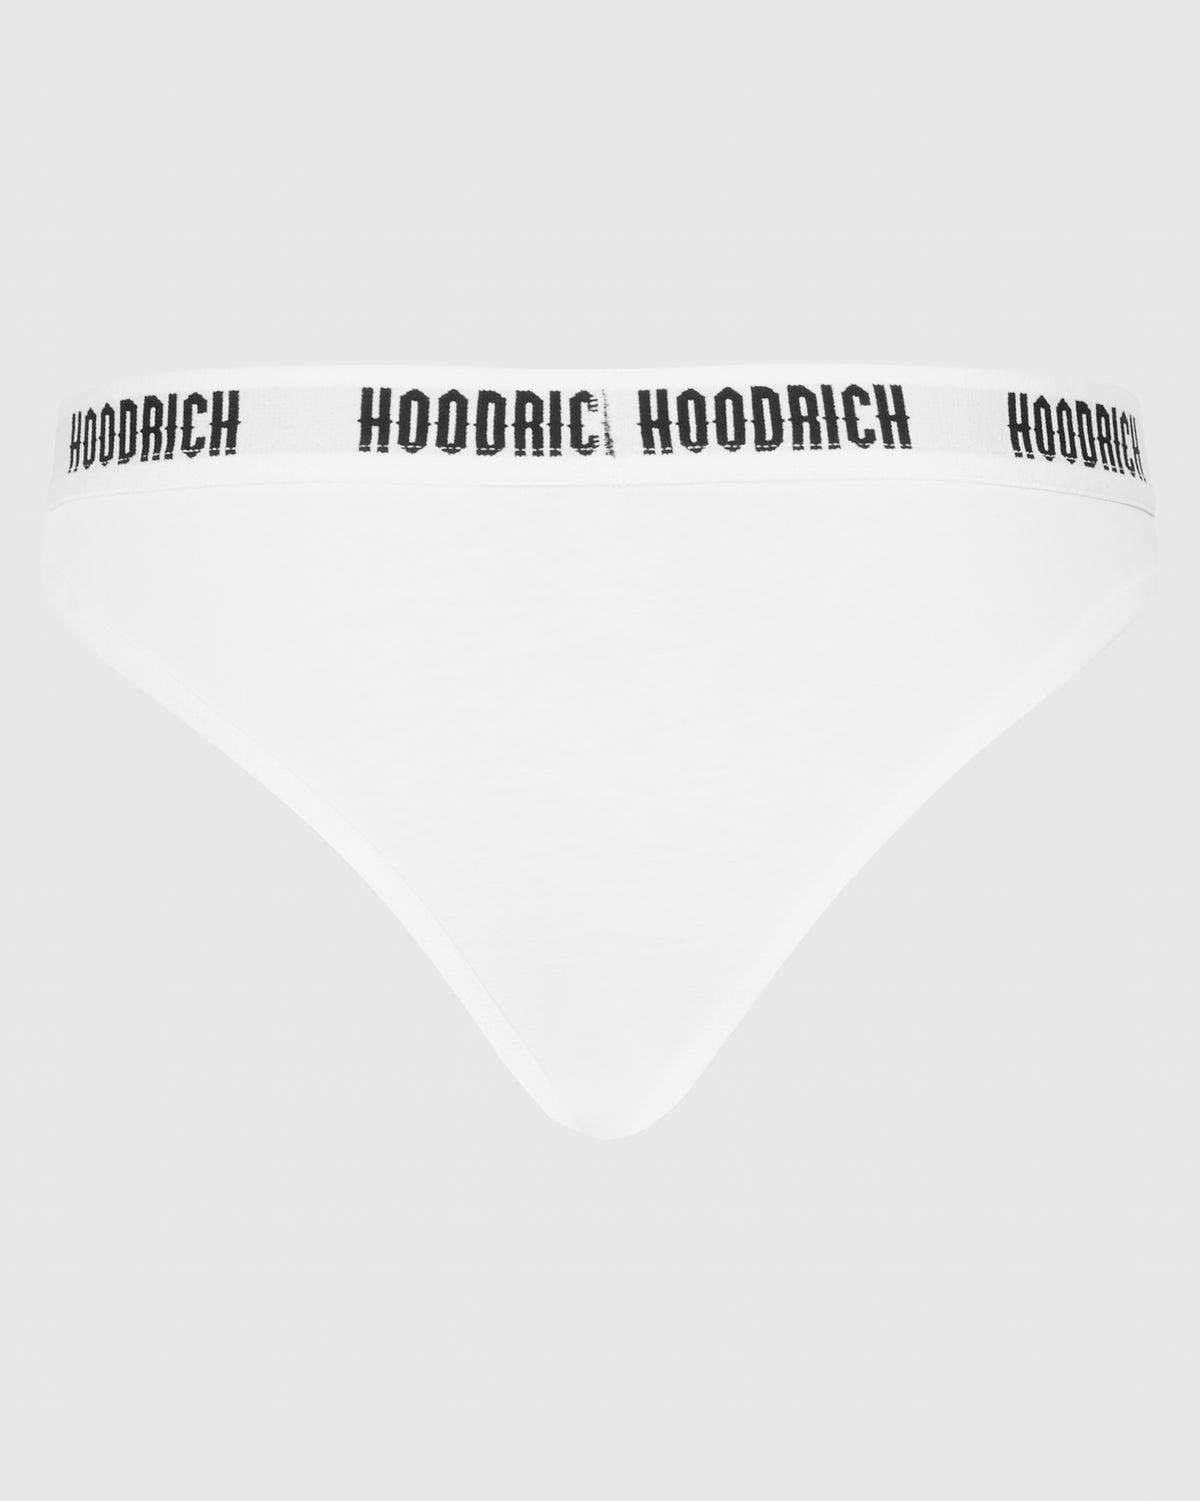 Hoodrich Women's Underwear